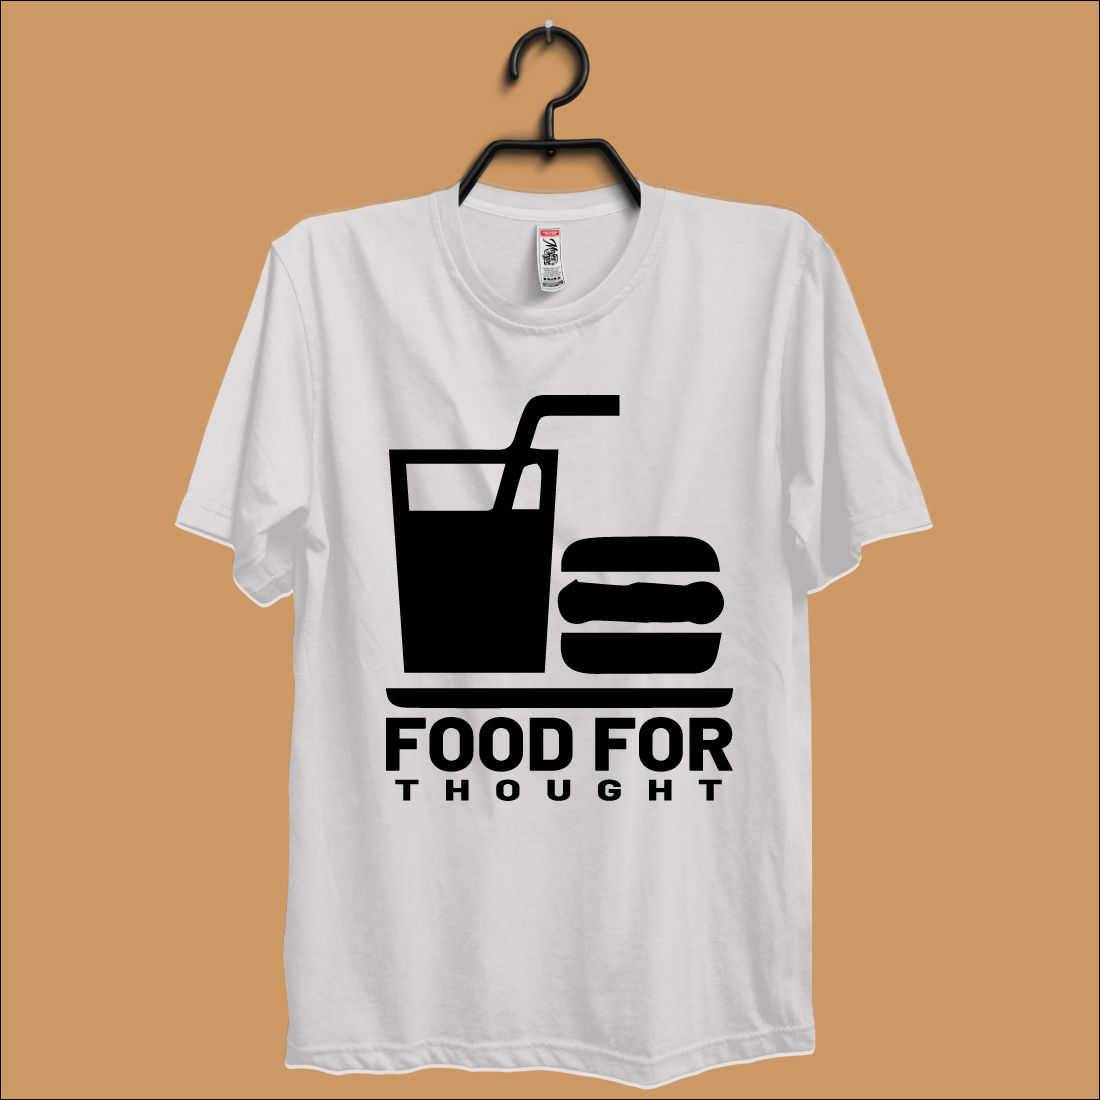 food t shirt design05 787